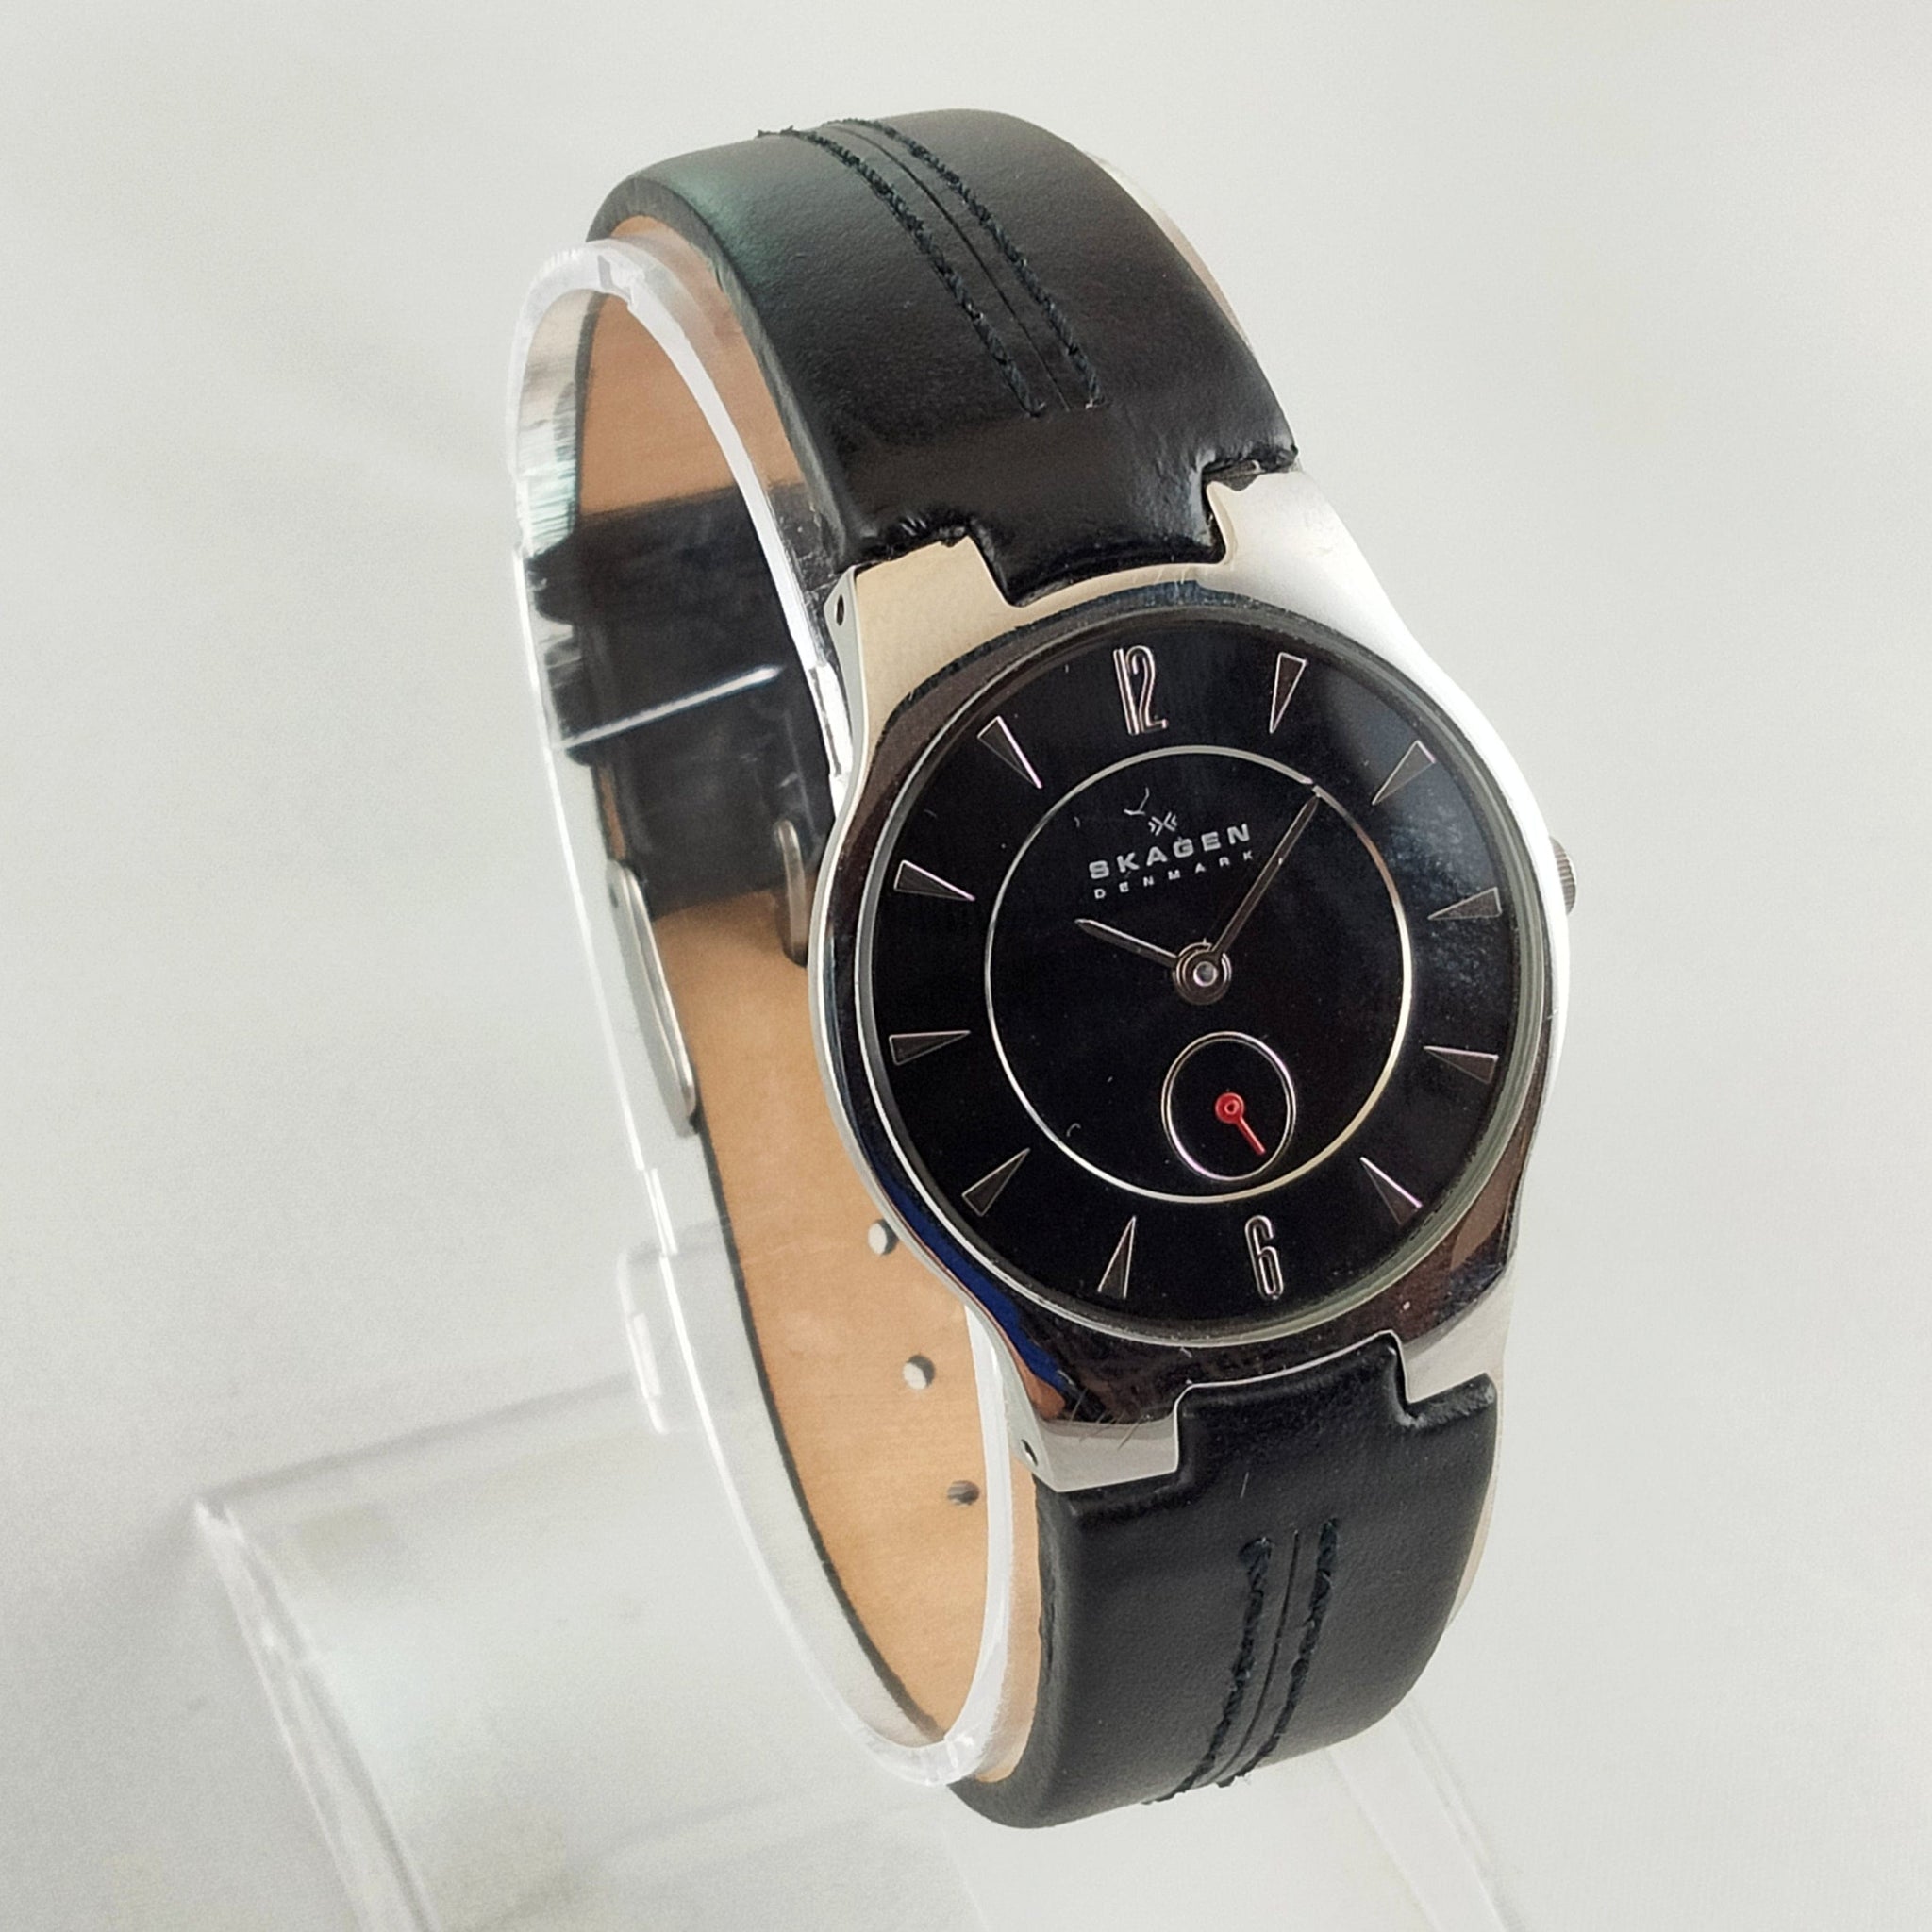 Skagen Men's Stainless Steel Watch, Black Dial, Black Genuine - I Like Mikes Century Modern